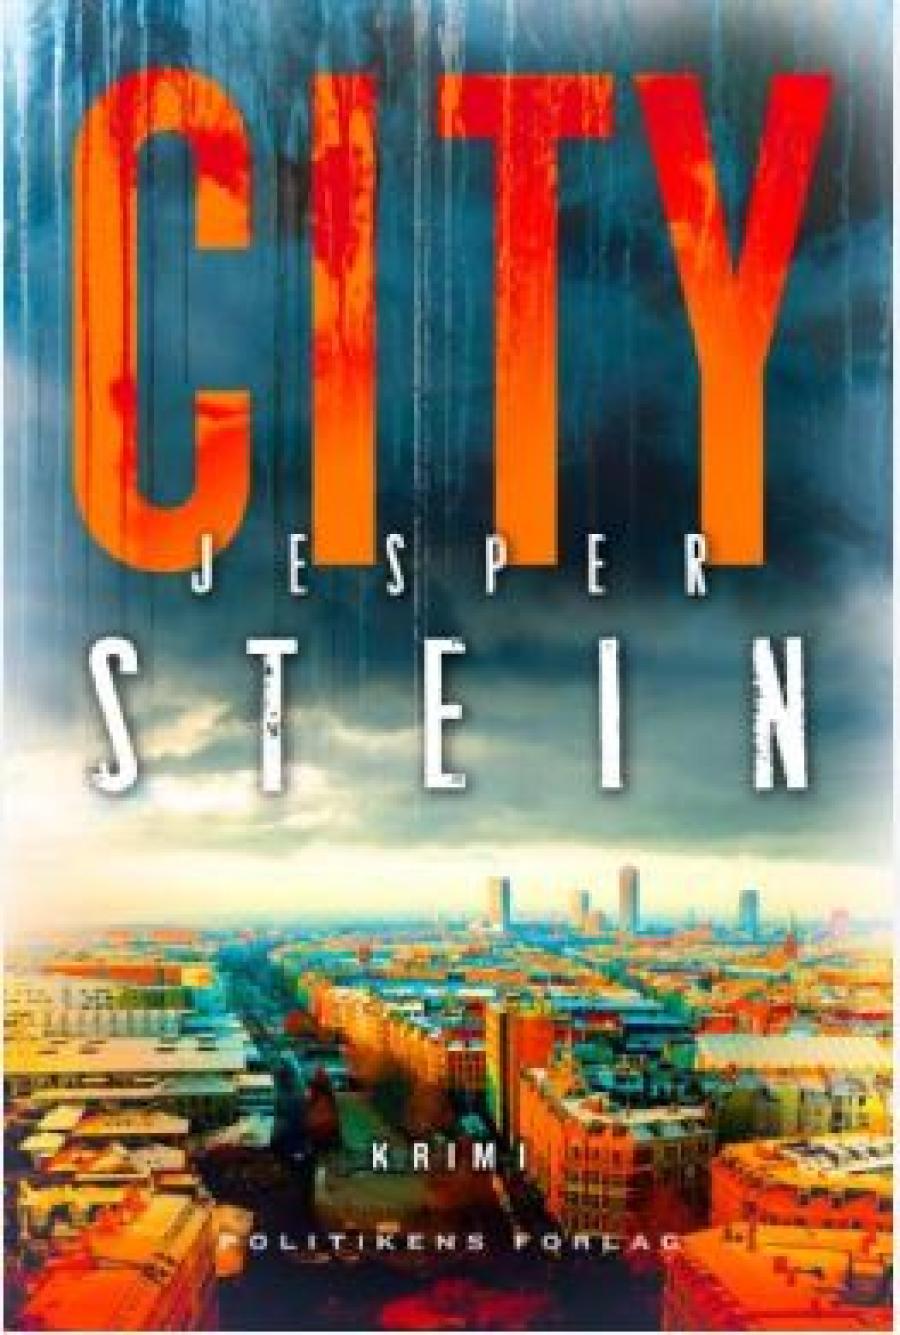 Jesper Stein, "City"